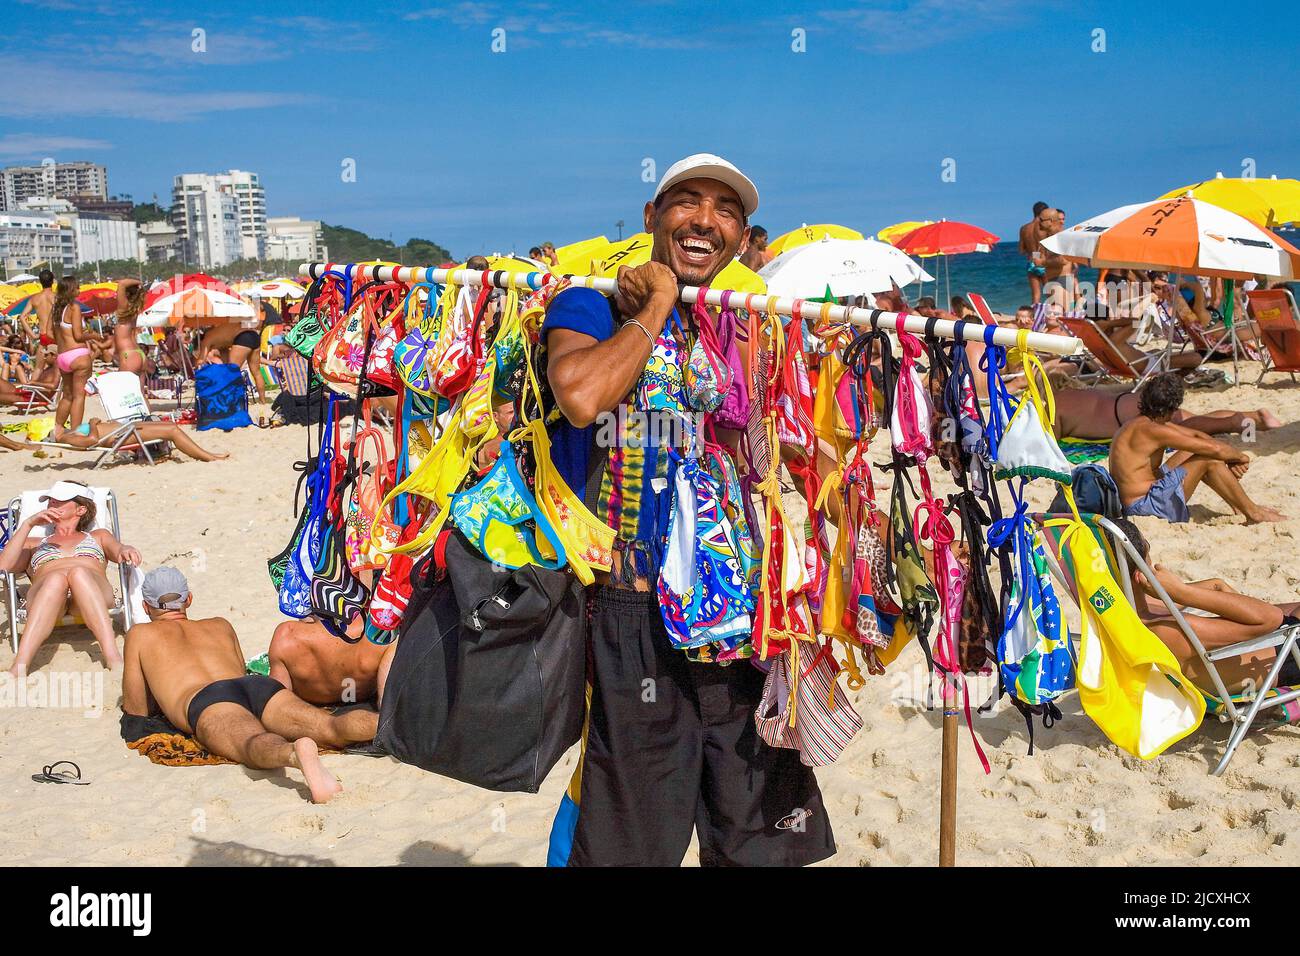 Bikini seller ipanema beach hi-res stock photography and images - Alamy